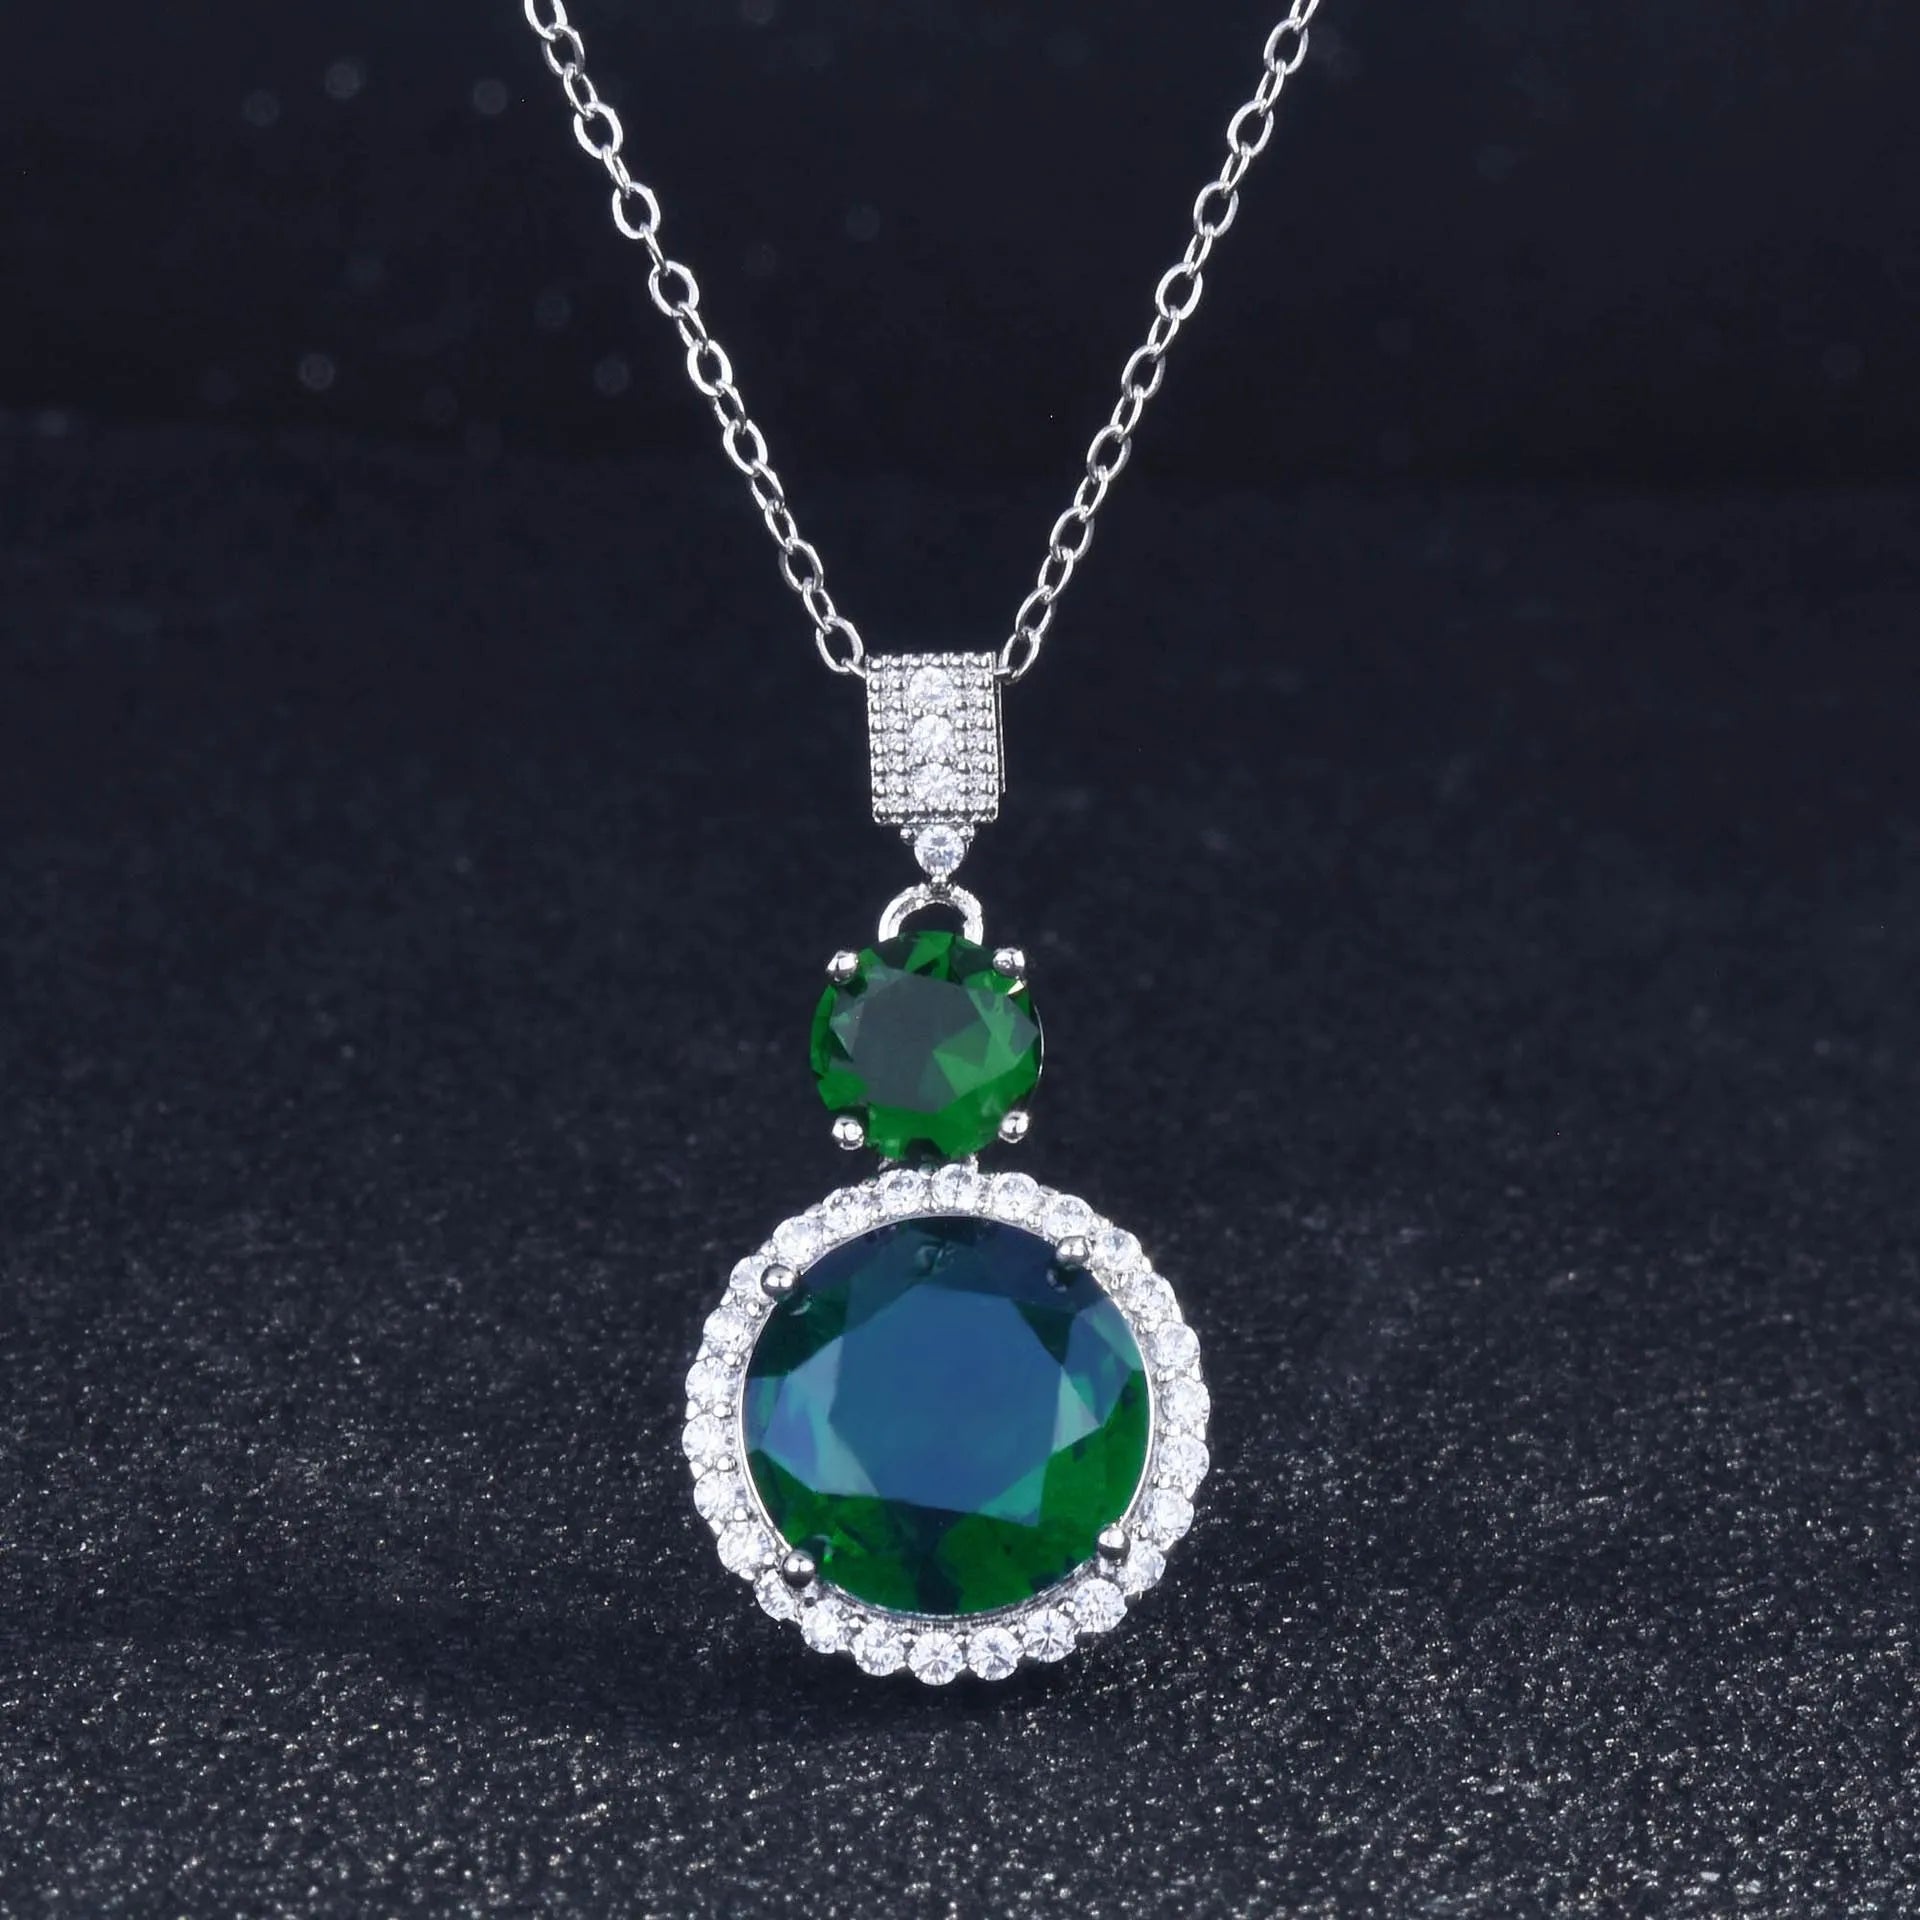 Classic Quality Round Emerald Stone Pendant NecklaceSilver Color45cm